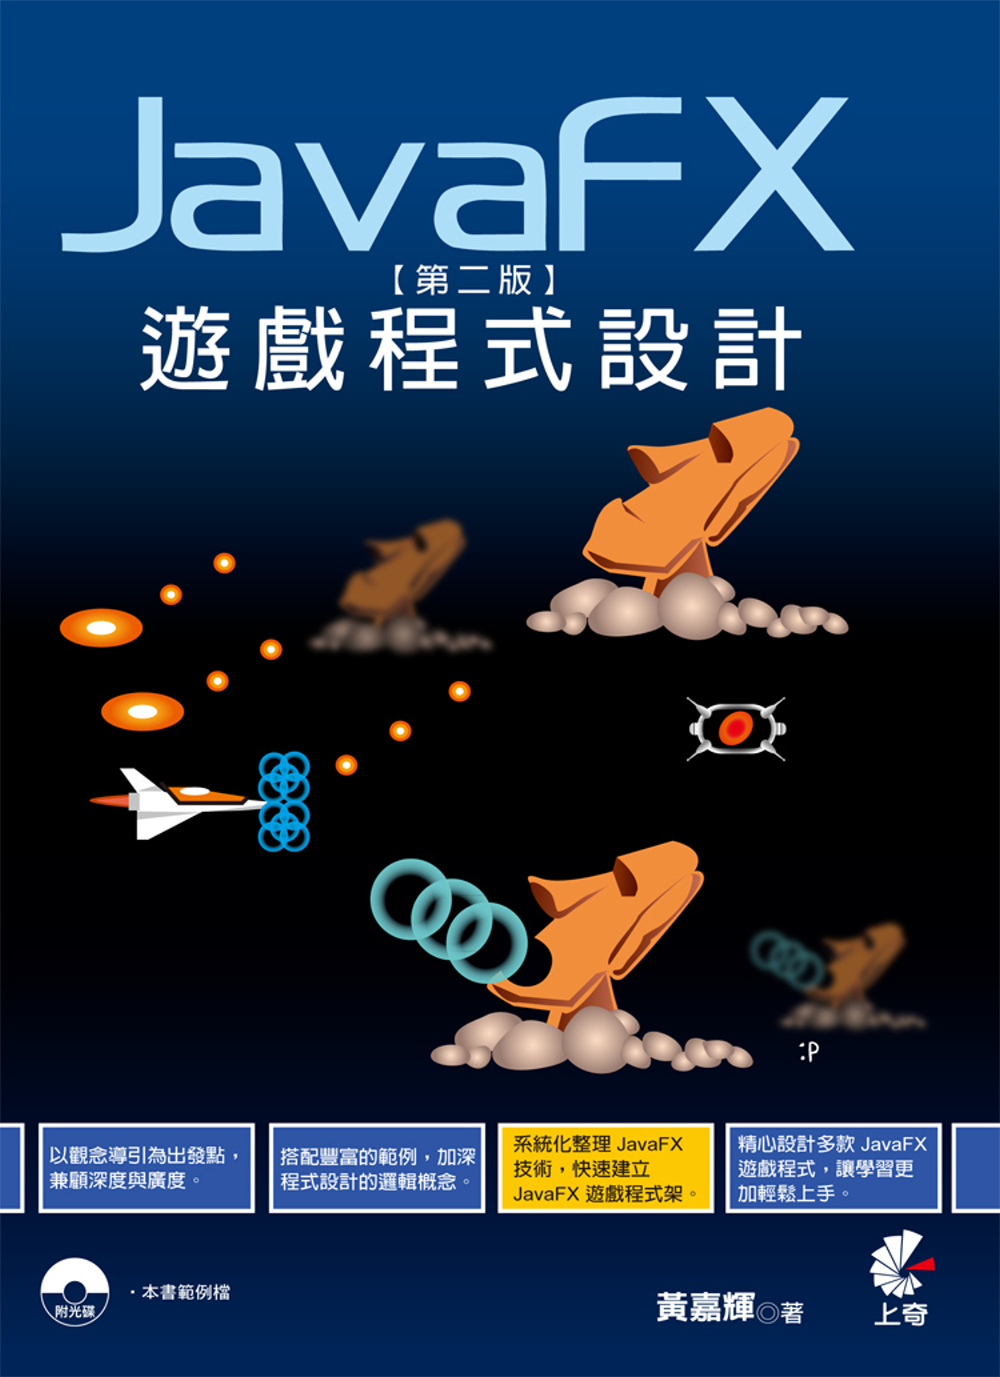 JavaFx遊戲程式設計(第二版)附光碟